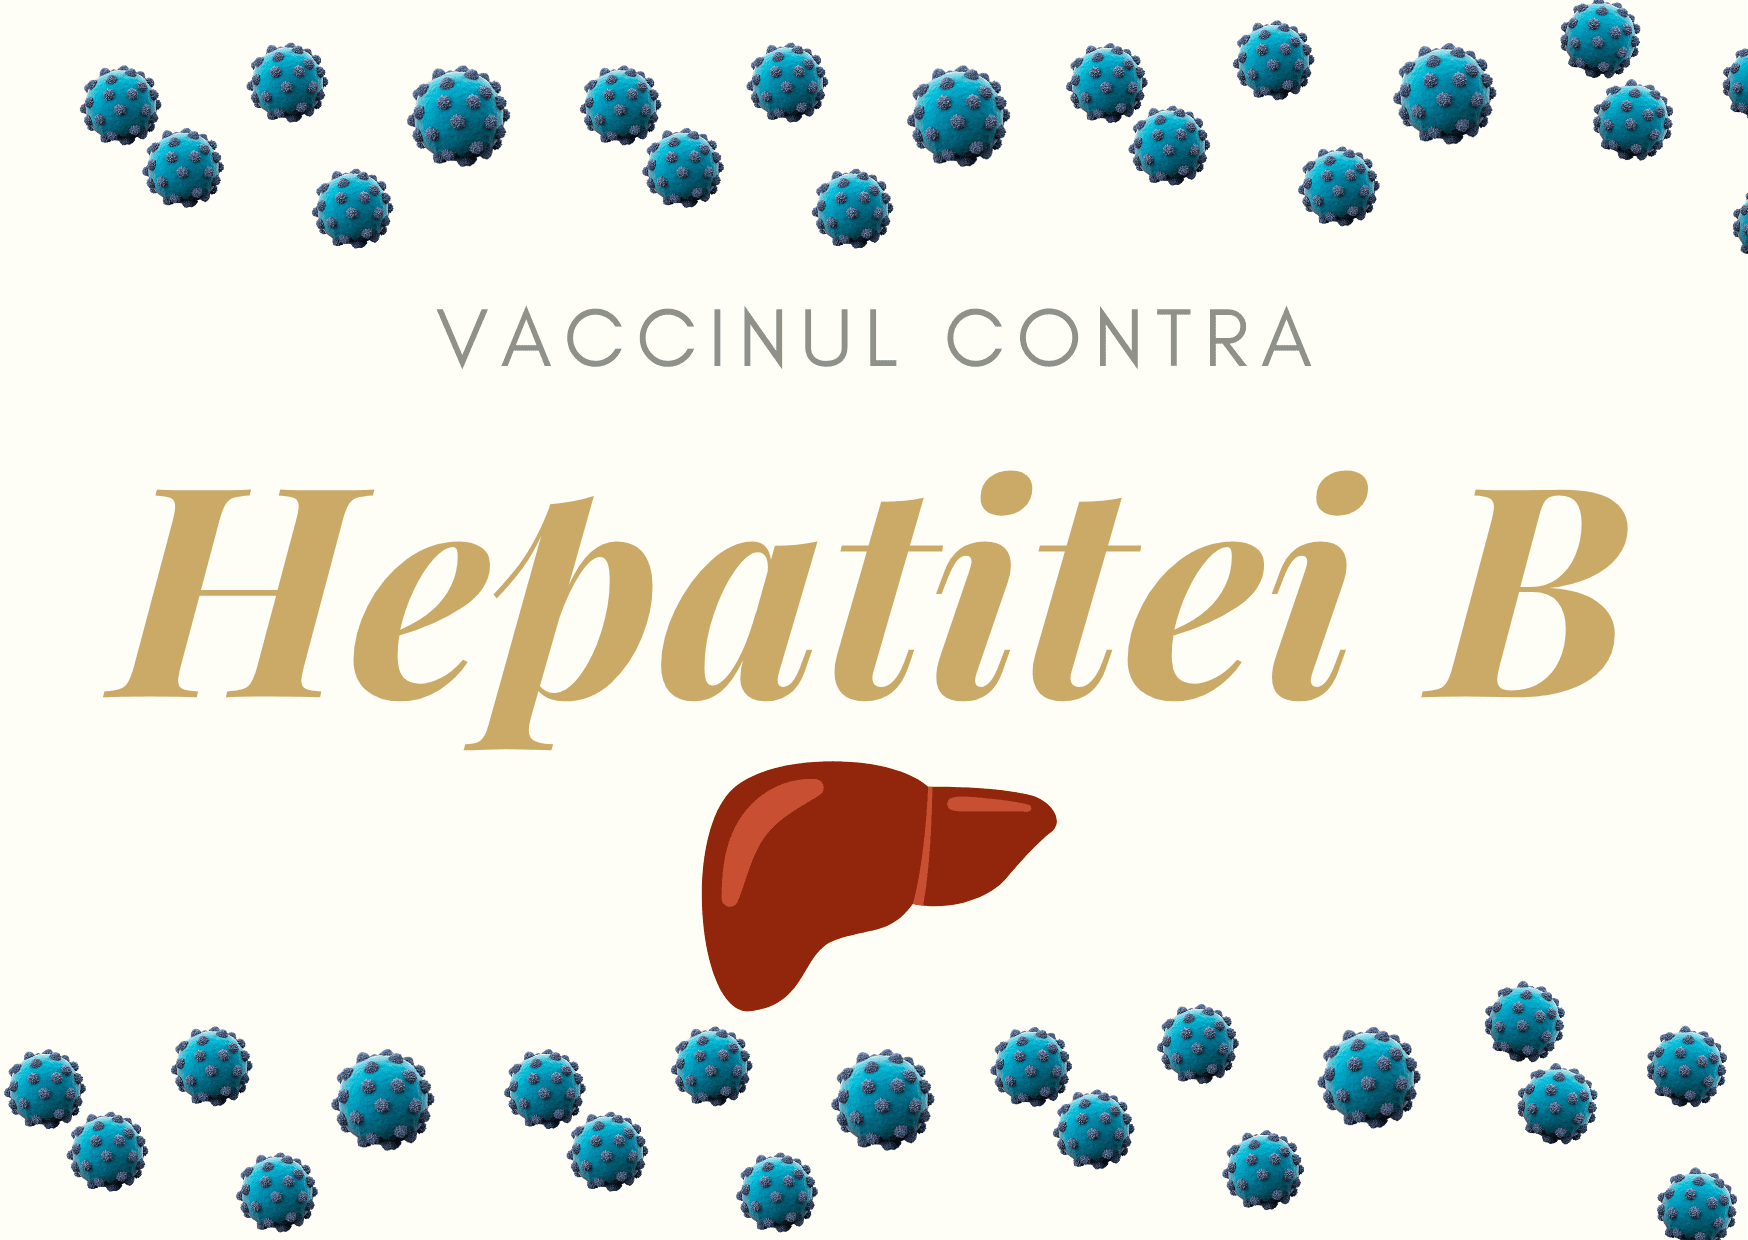 Vaccinul contra hepatitei B